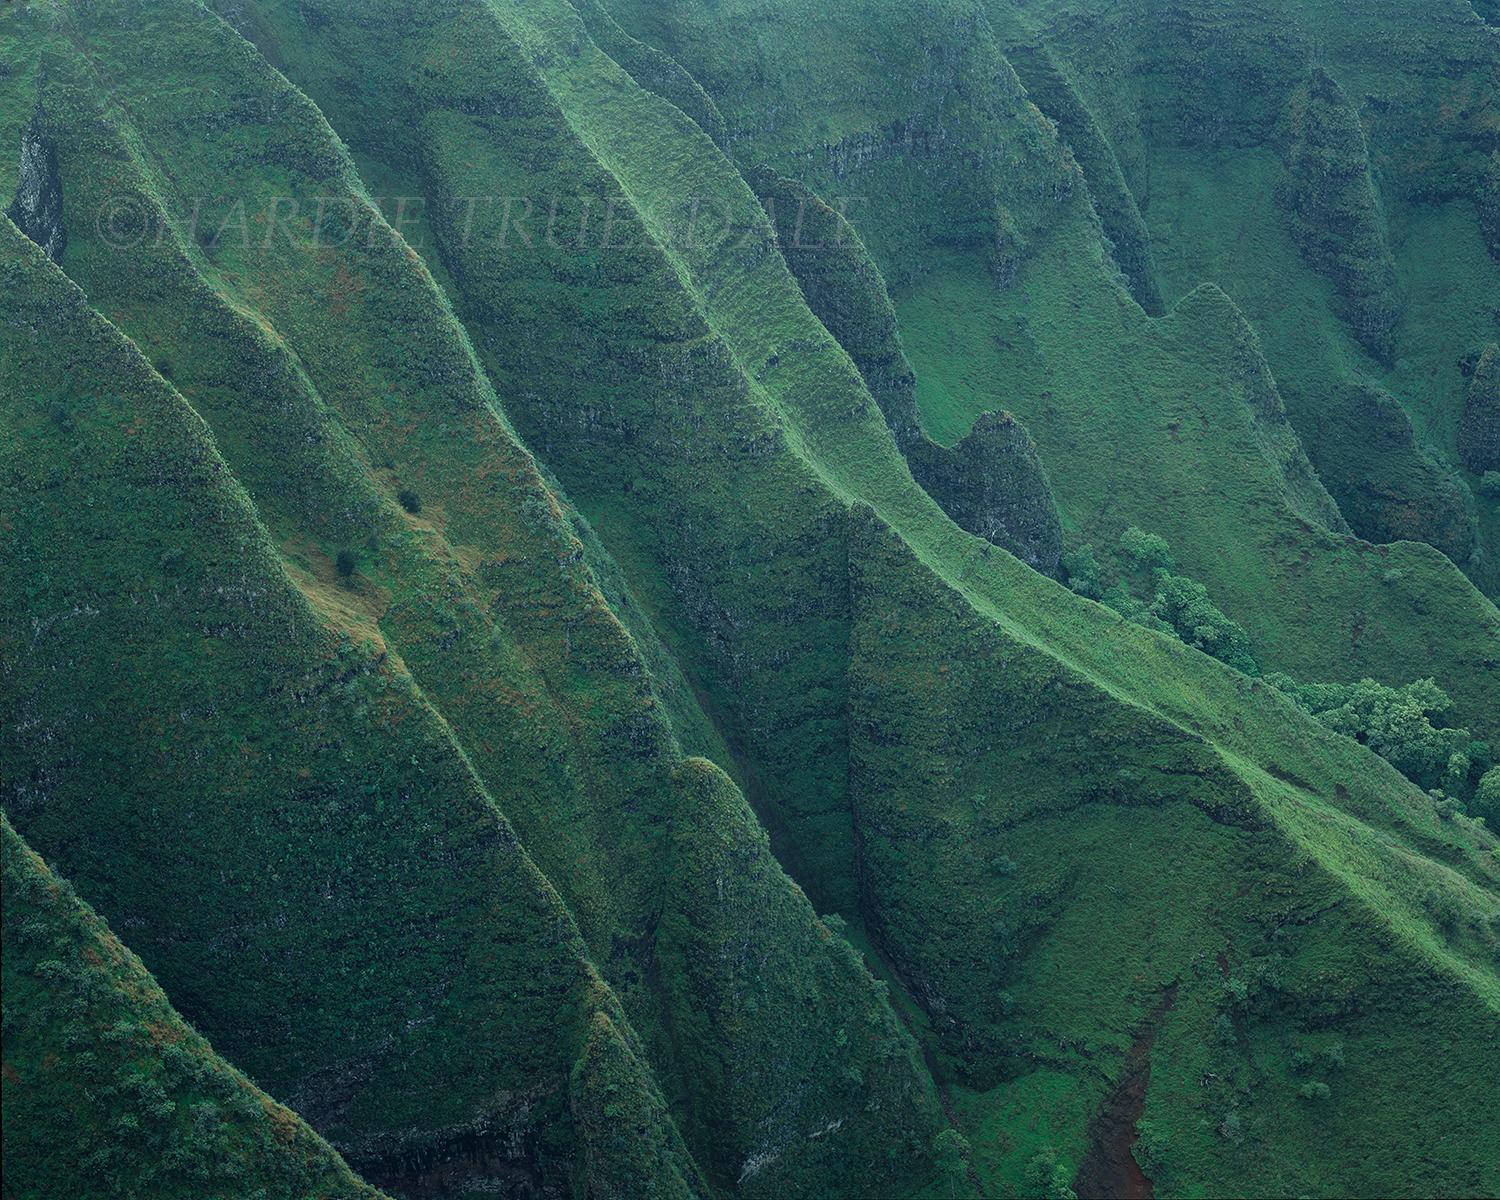  HI#027 " The Green Cliffs of Nuololo, Kokee State Park, Kauai, HI"  